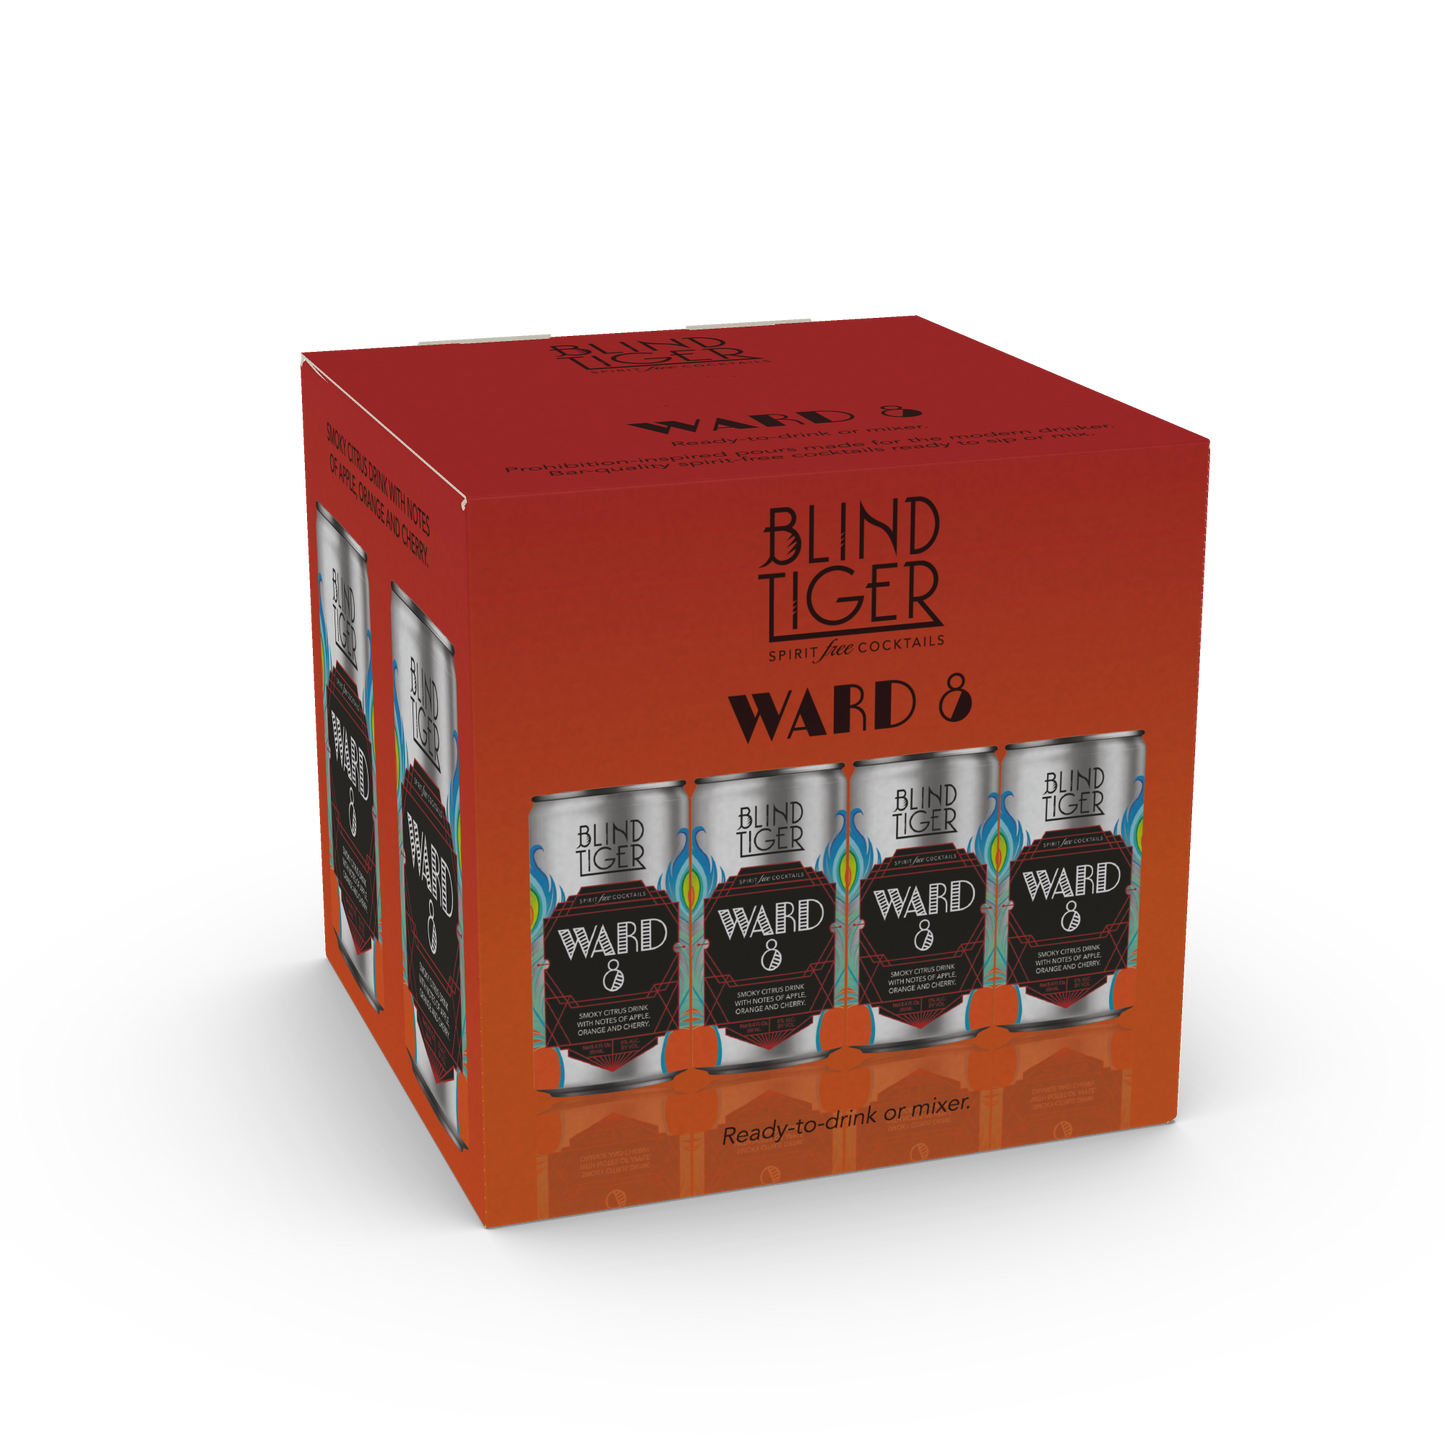 Blind Tiger - Ward 8 - Spirit-Free - Slim Can 4-pack - 8.4oz